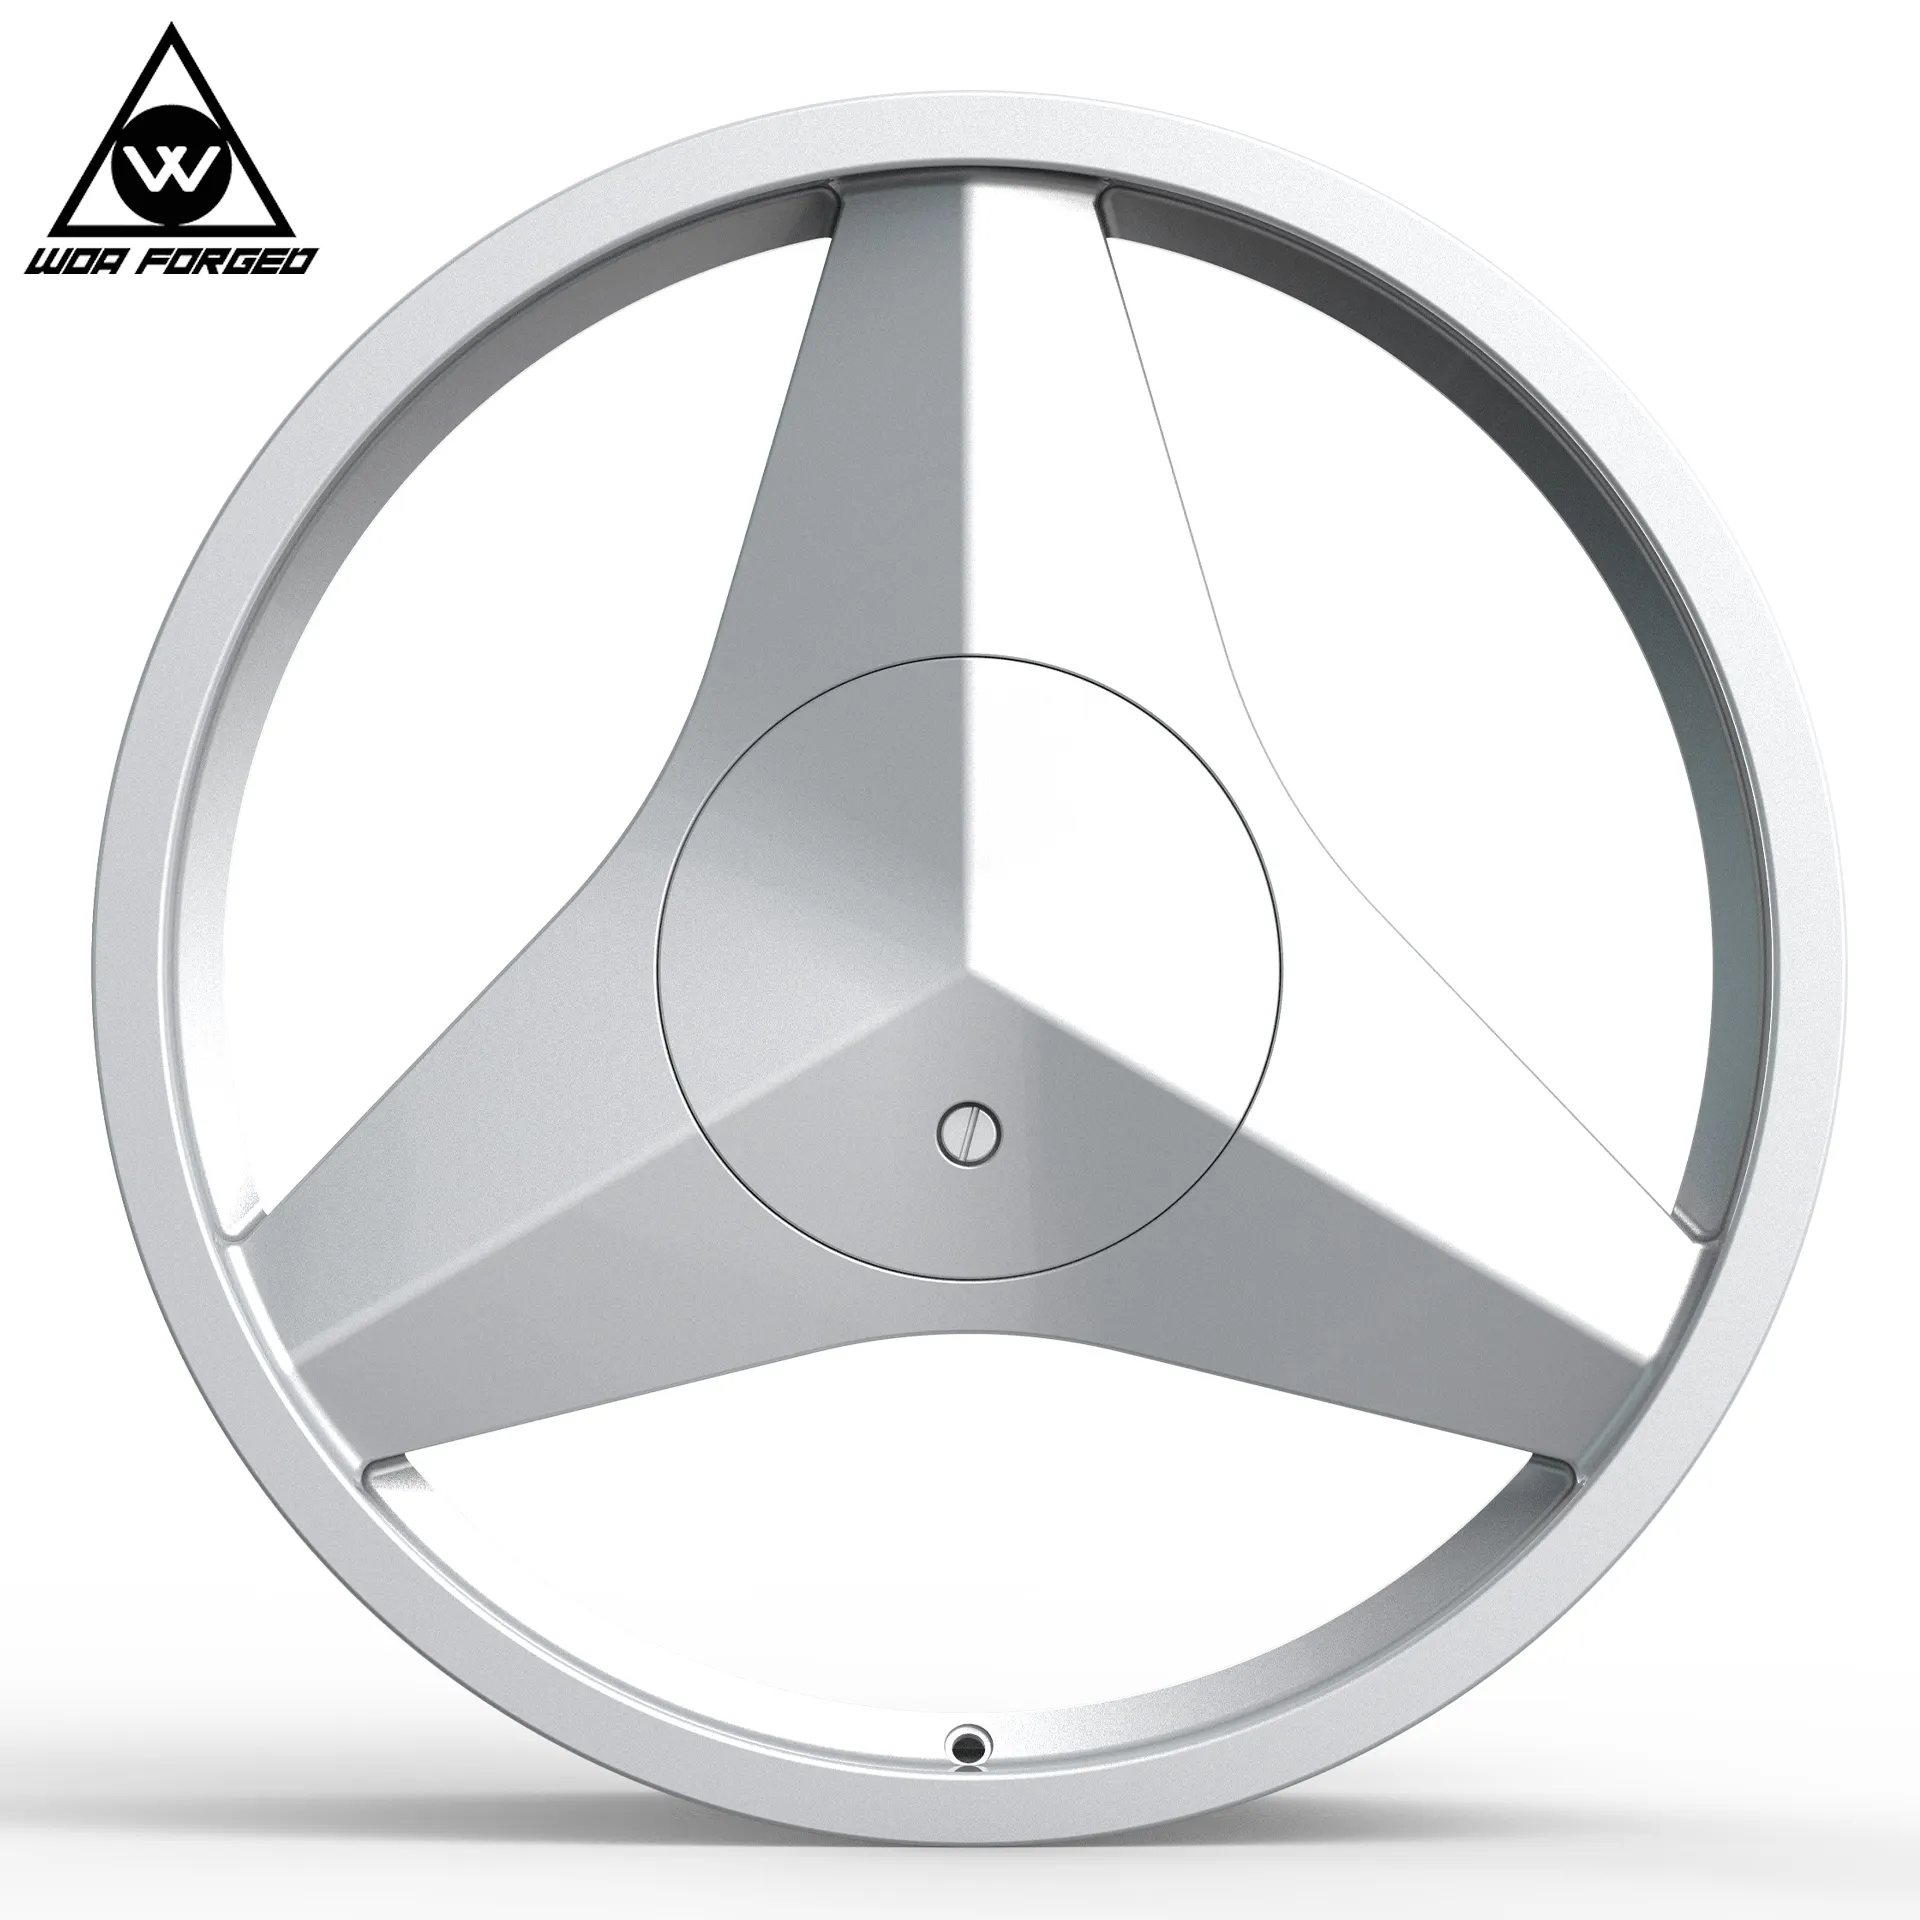 Wholesale Car Wheels Shaped Forged Car Wheel Rim Triangle Trigeminal Star for Mercedes Benz Maybach Aluminum Customized 5 Year